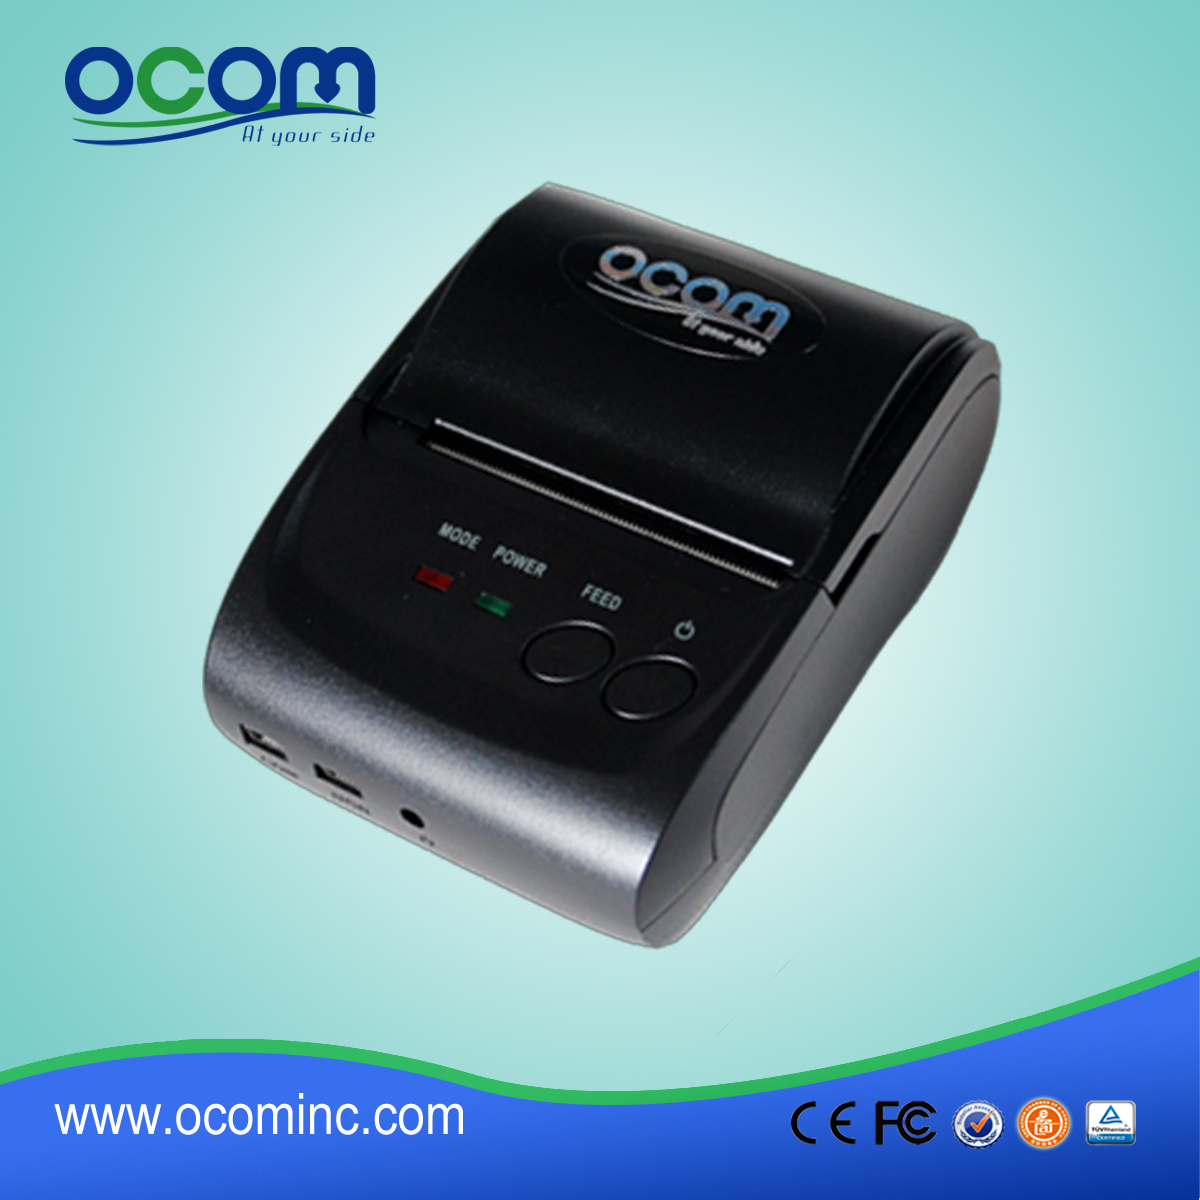 OCPP-M05: Minihand Bluetooth-Drucker, POS-Thermodrucker